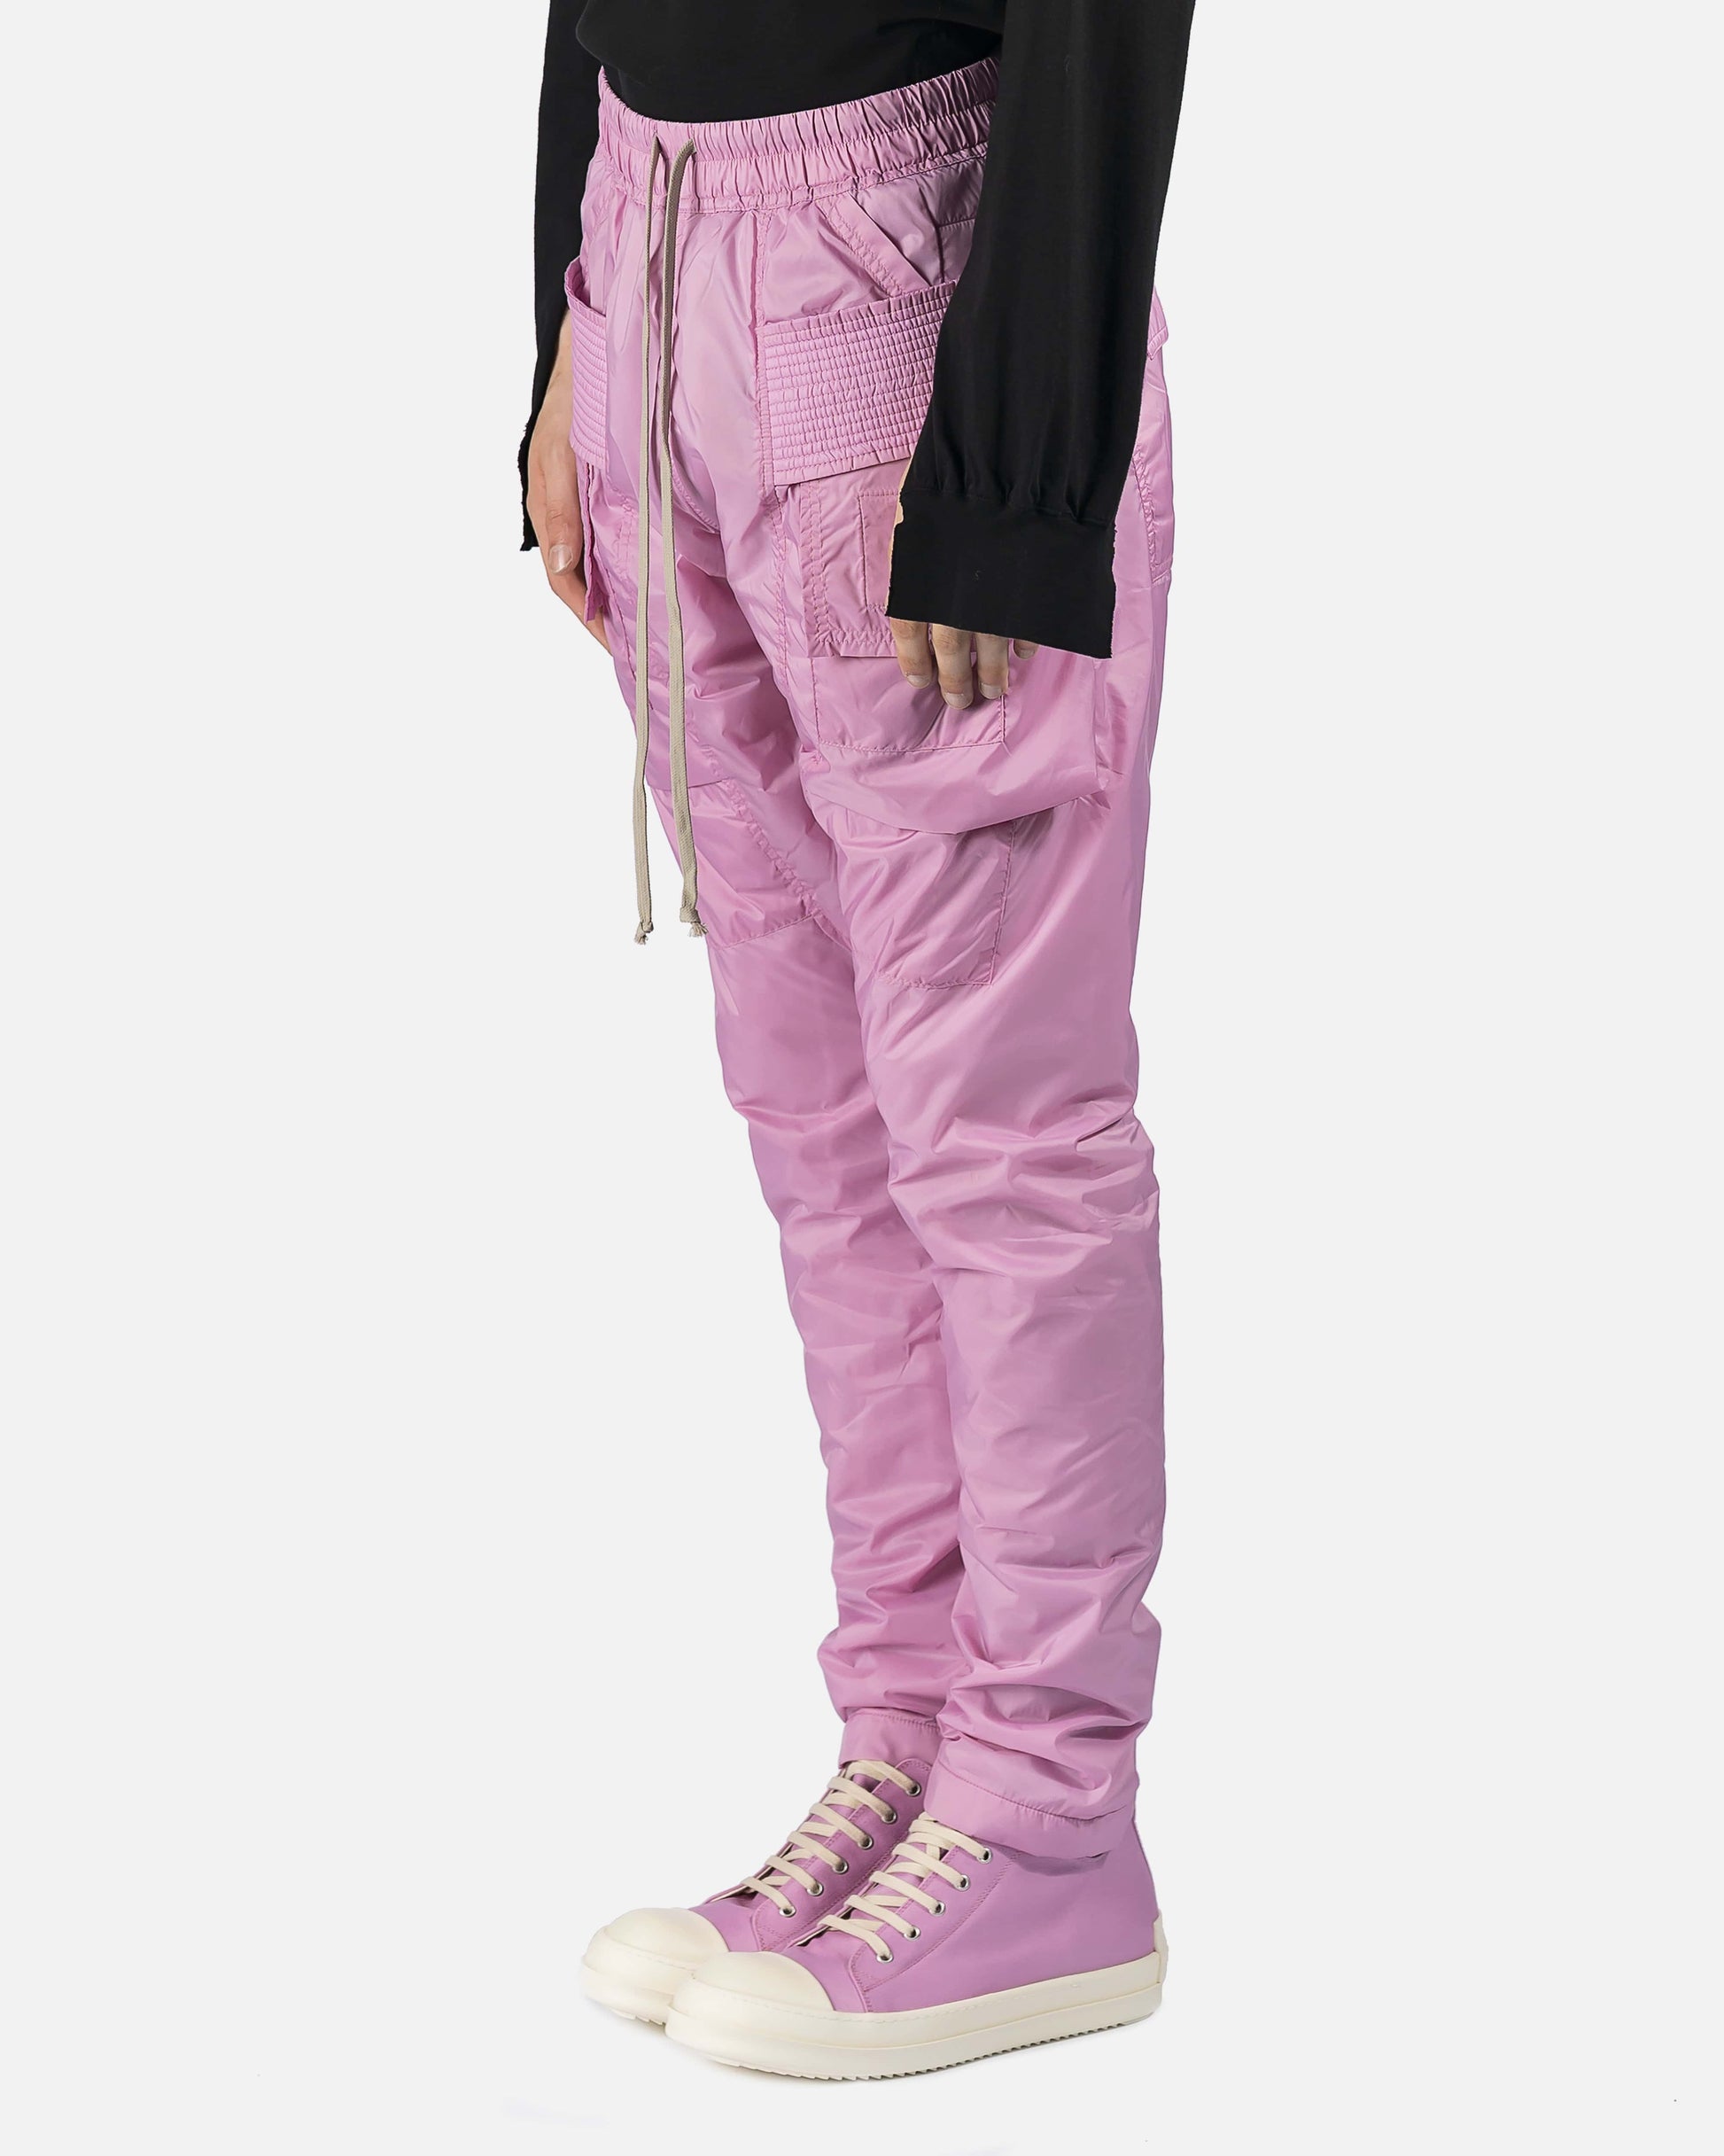 Rick Owens DRKSHDW Men's Pants Creatch Cargo Drawstring in Dirty Pink